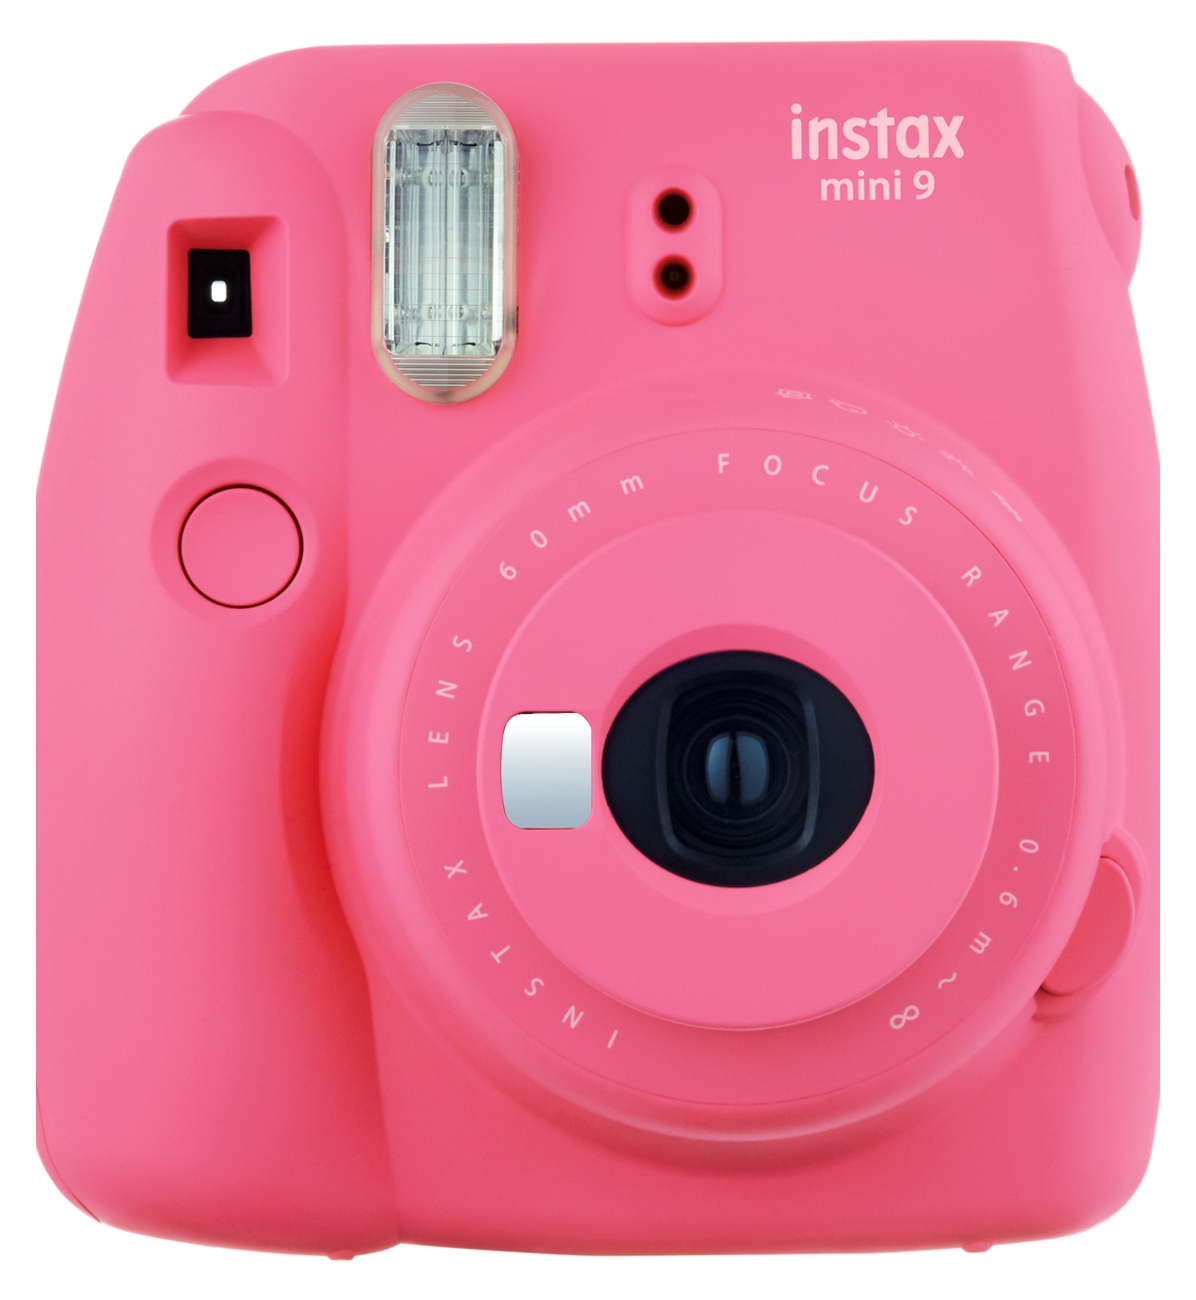 Fujifilm Instax mini 9 with 10 shots - Coral Pink